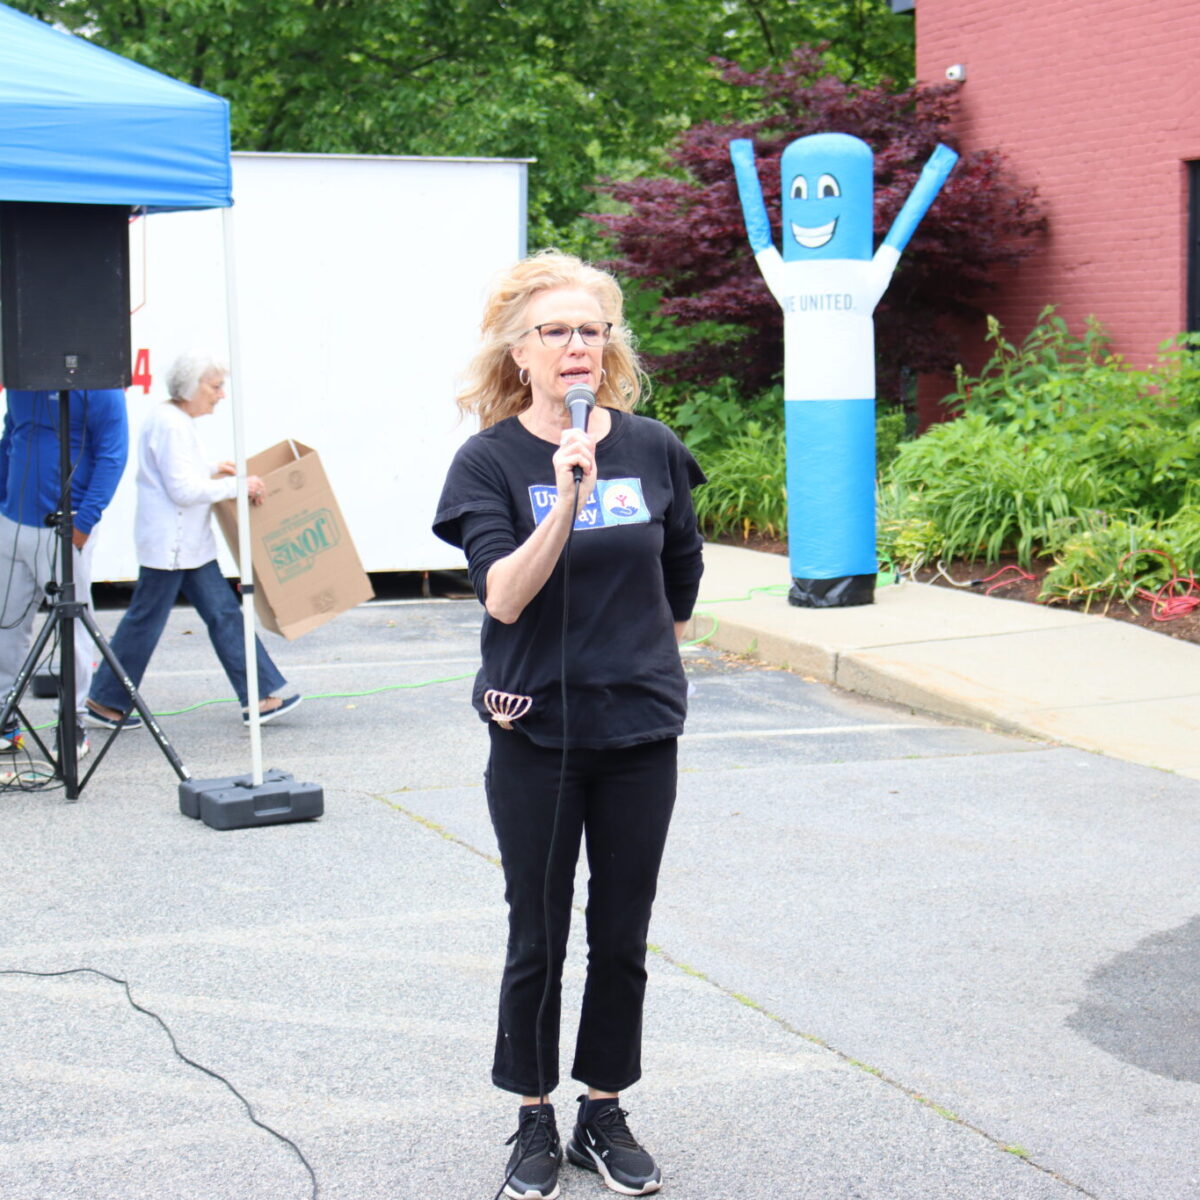 Lori DiMatteo, United Way of Rhode Island's coordinator of volunteer engagement, shares remarks.